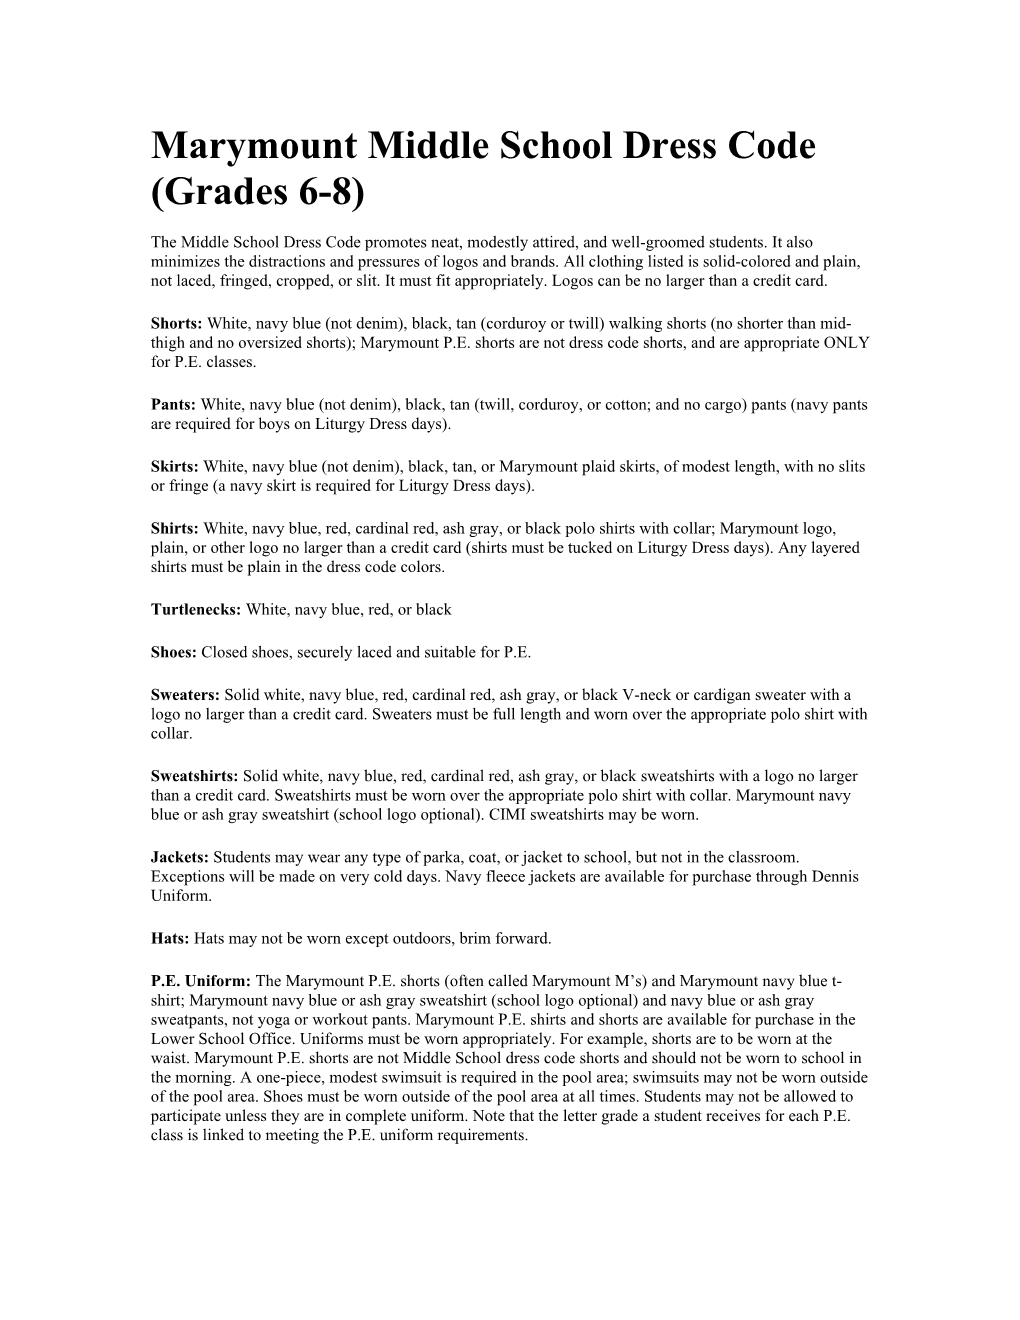 Marymount Middle School Dress Code (Grades 6-8)